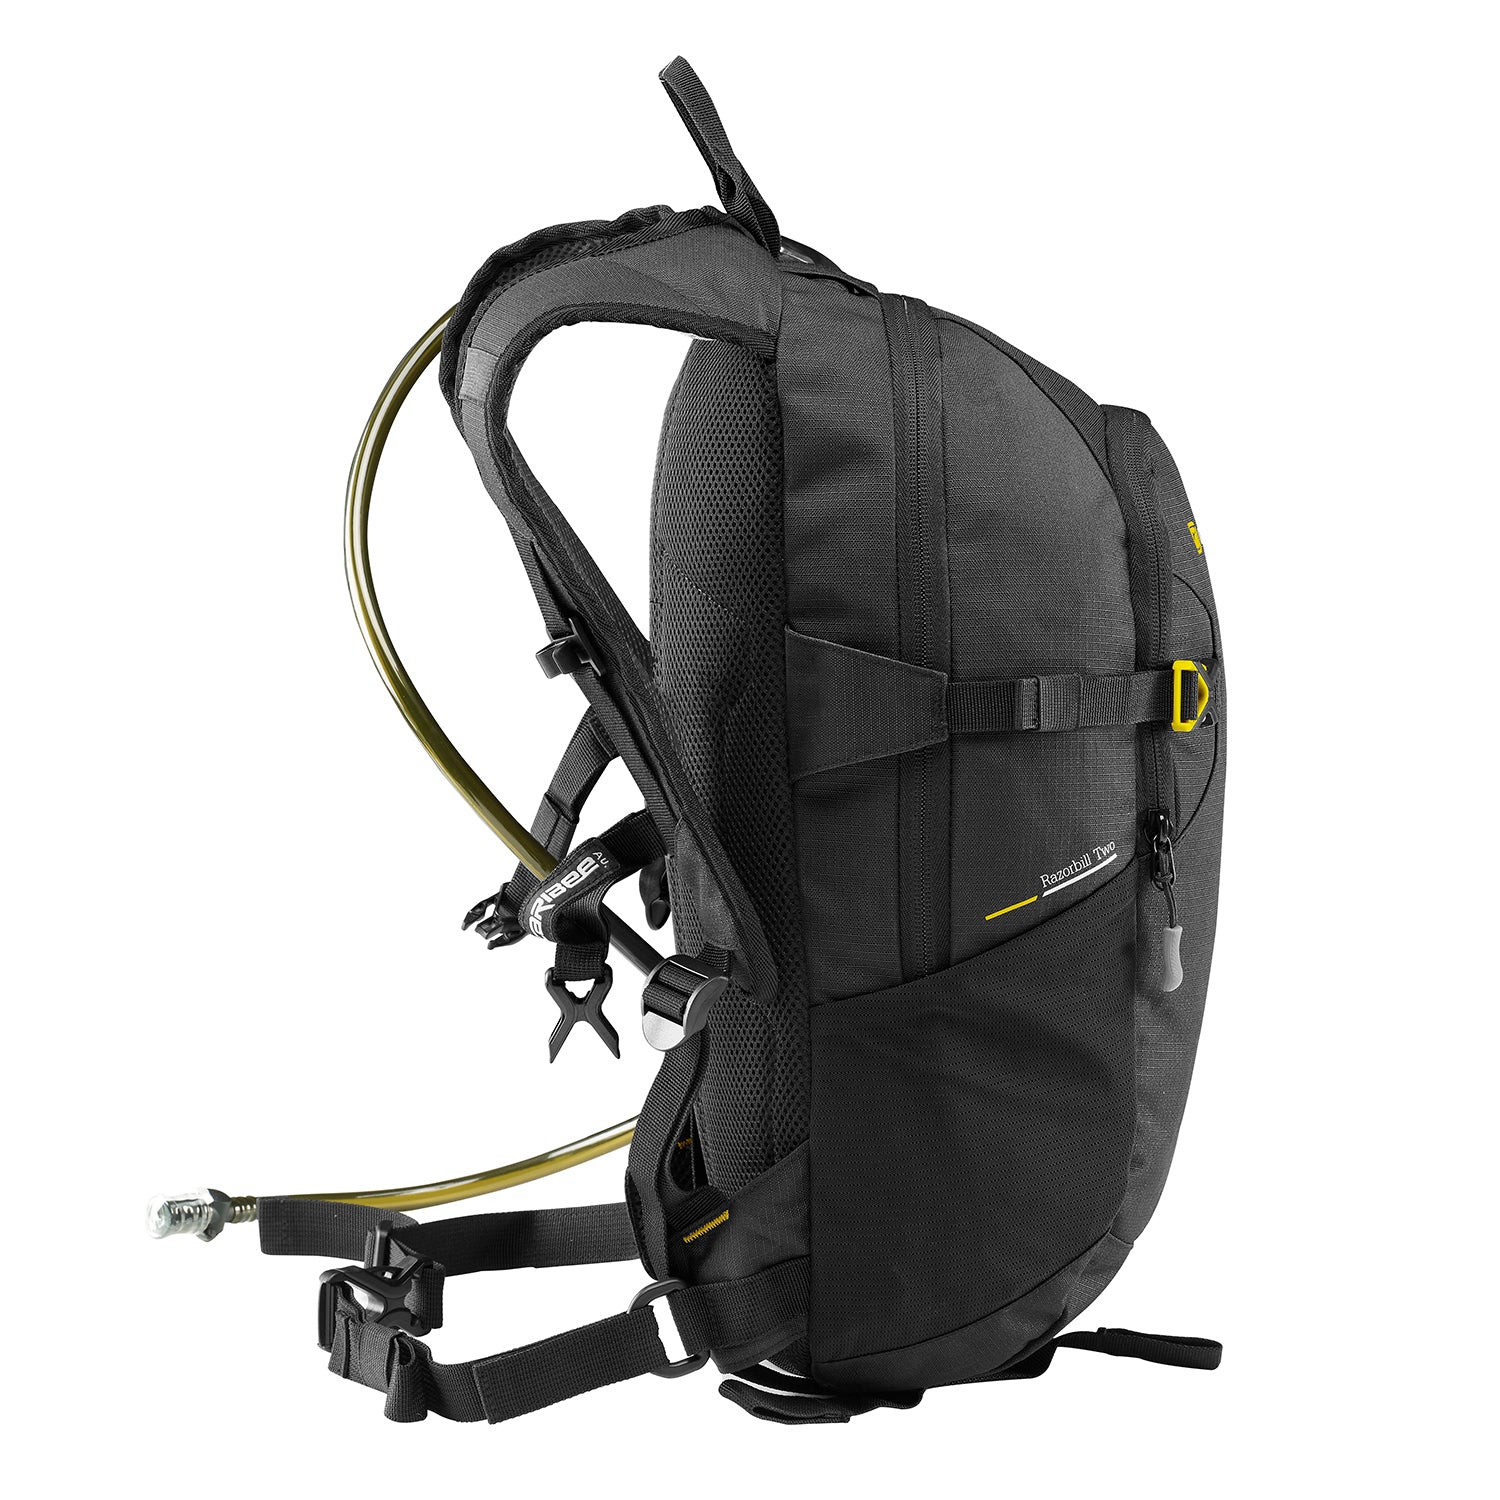 Caribee Razorbill Two hydration backpack Black/yellow side